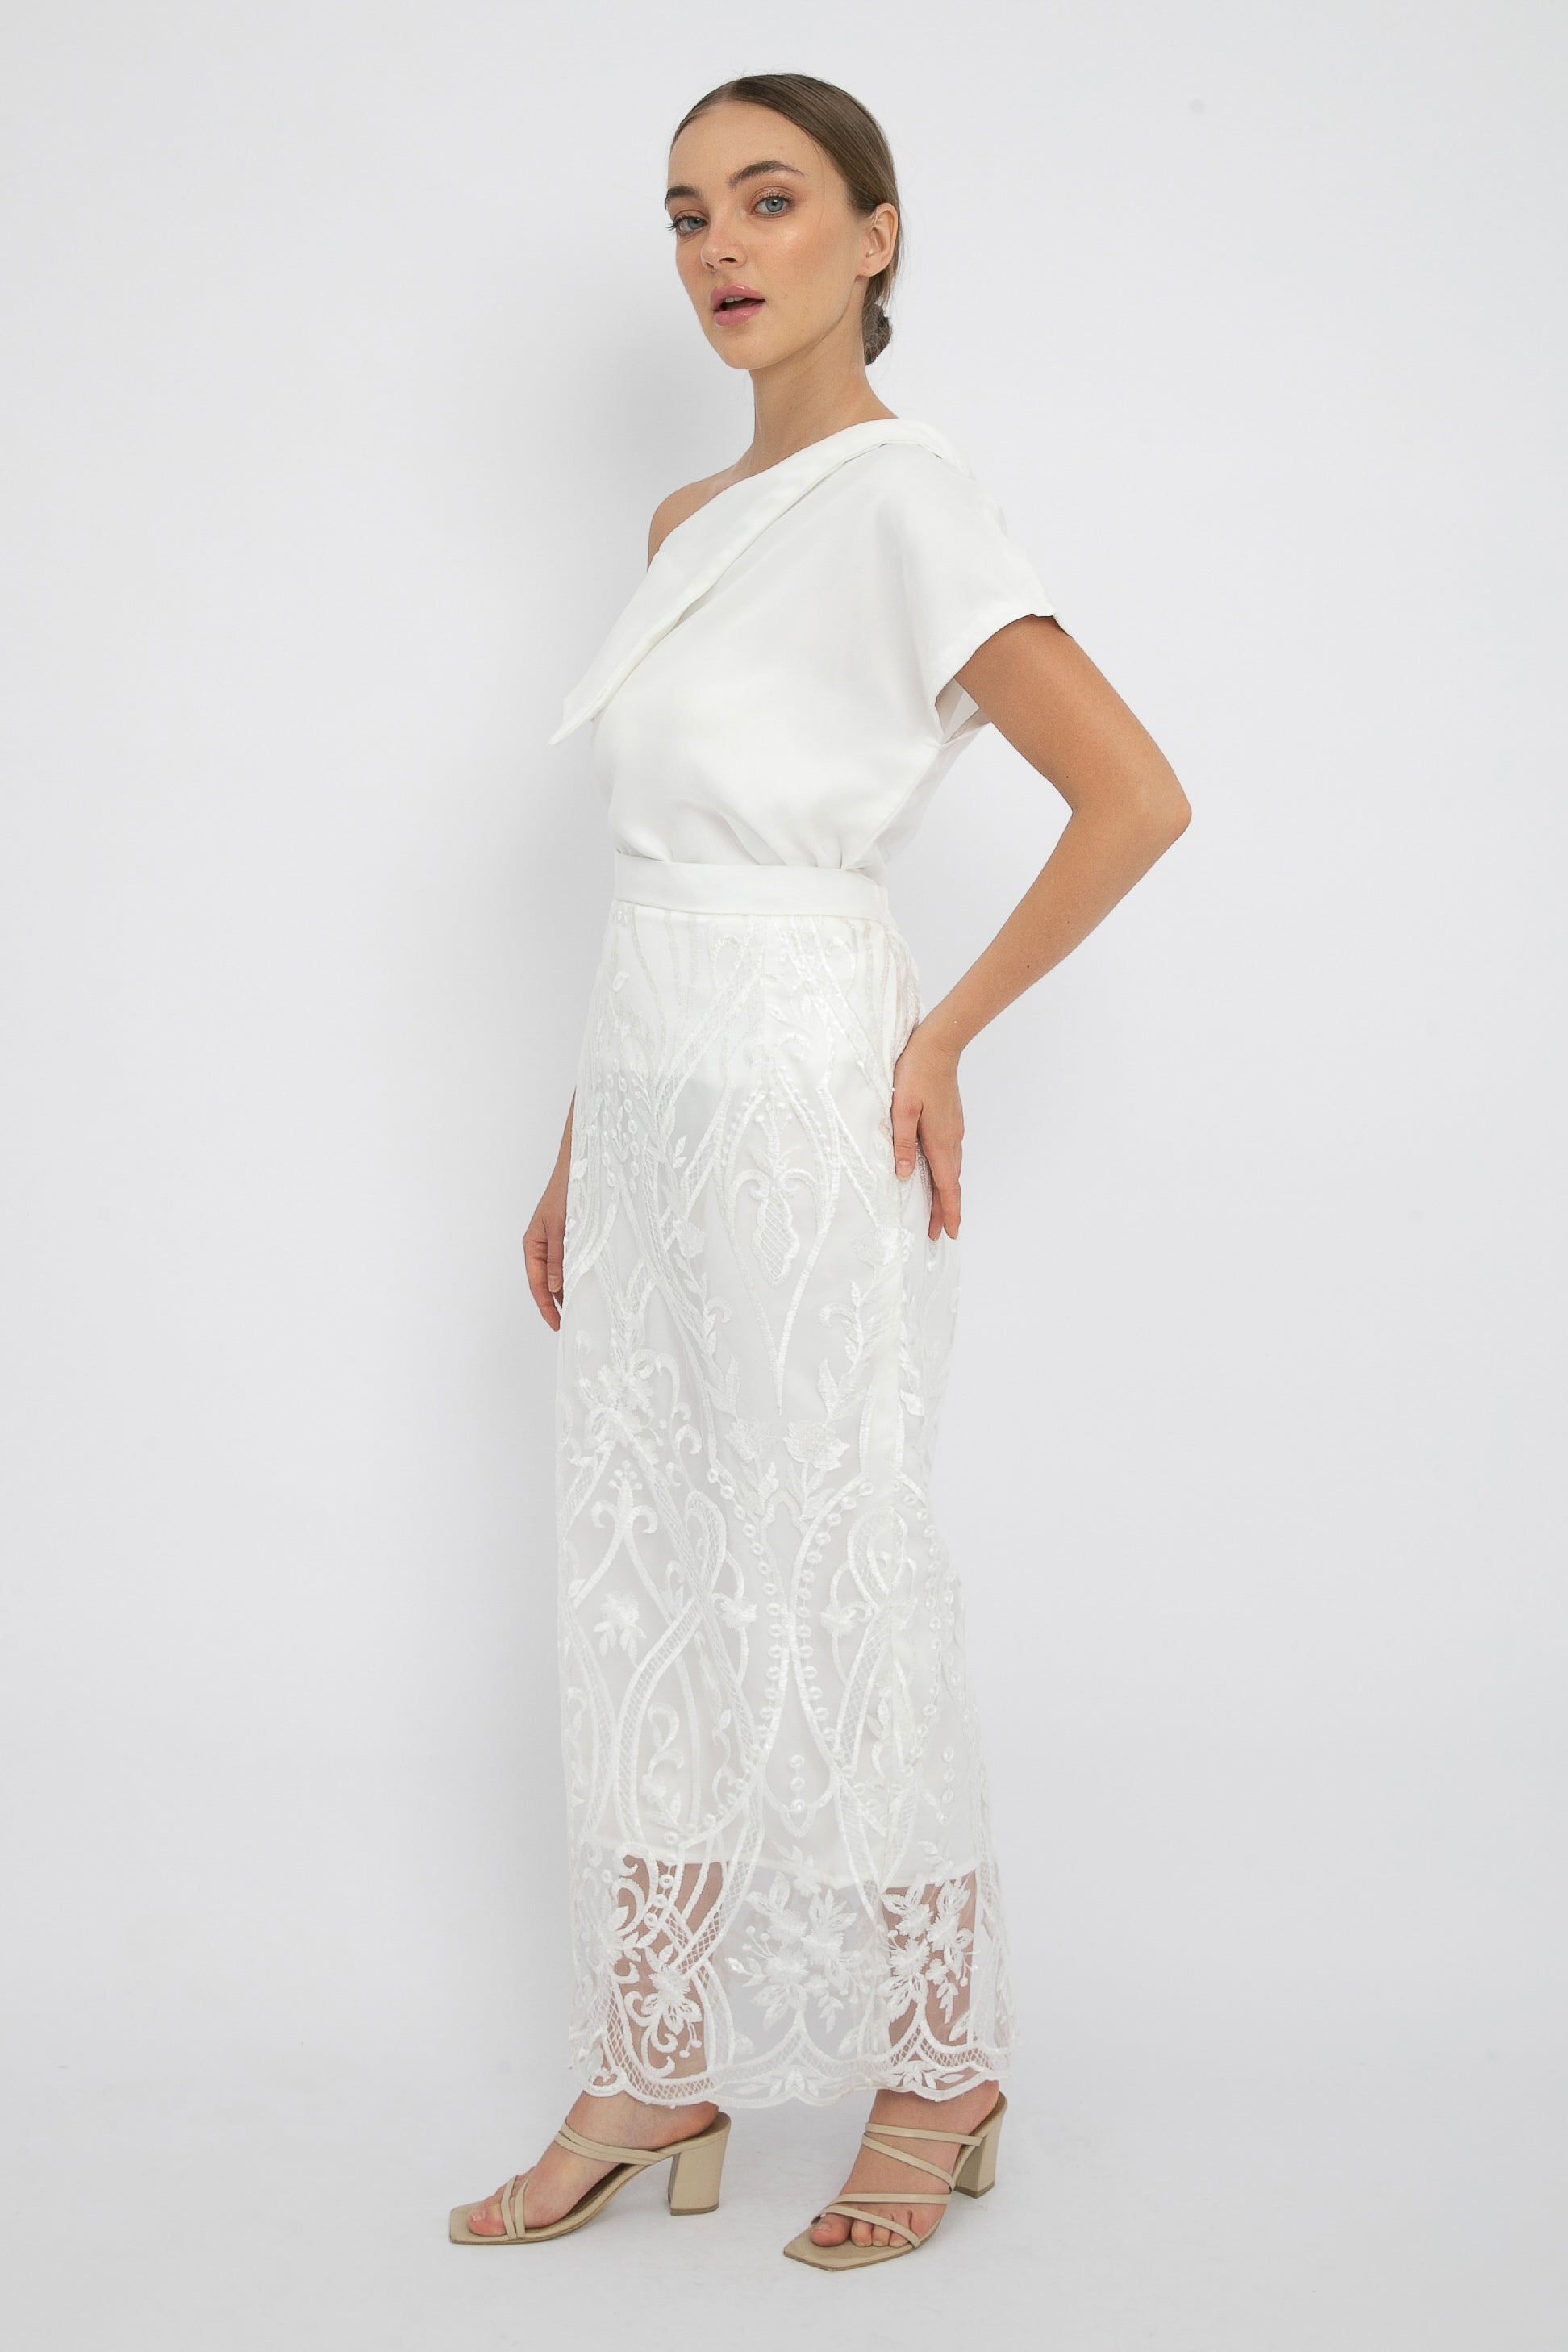 Maddison Dress Set in White